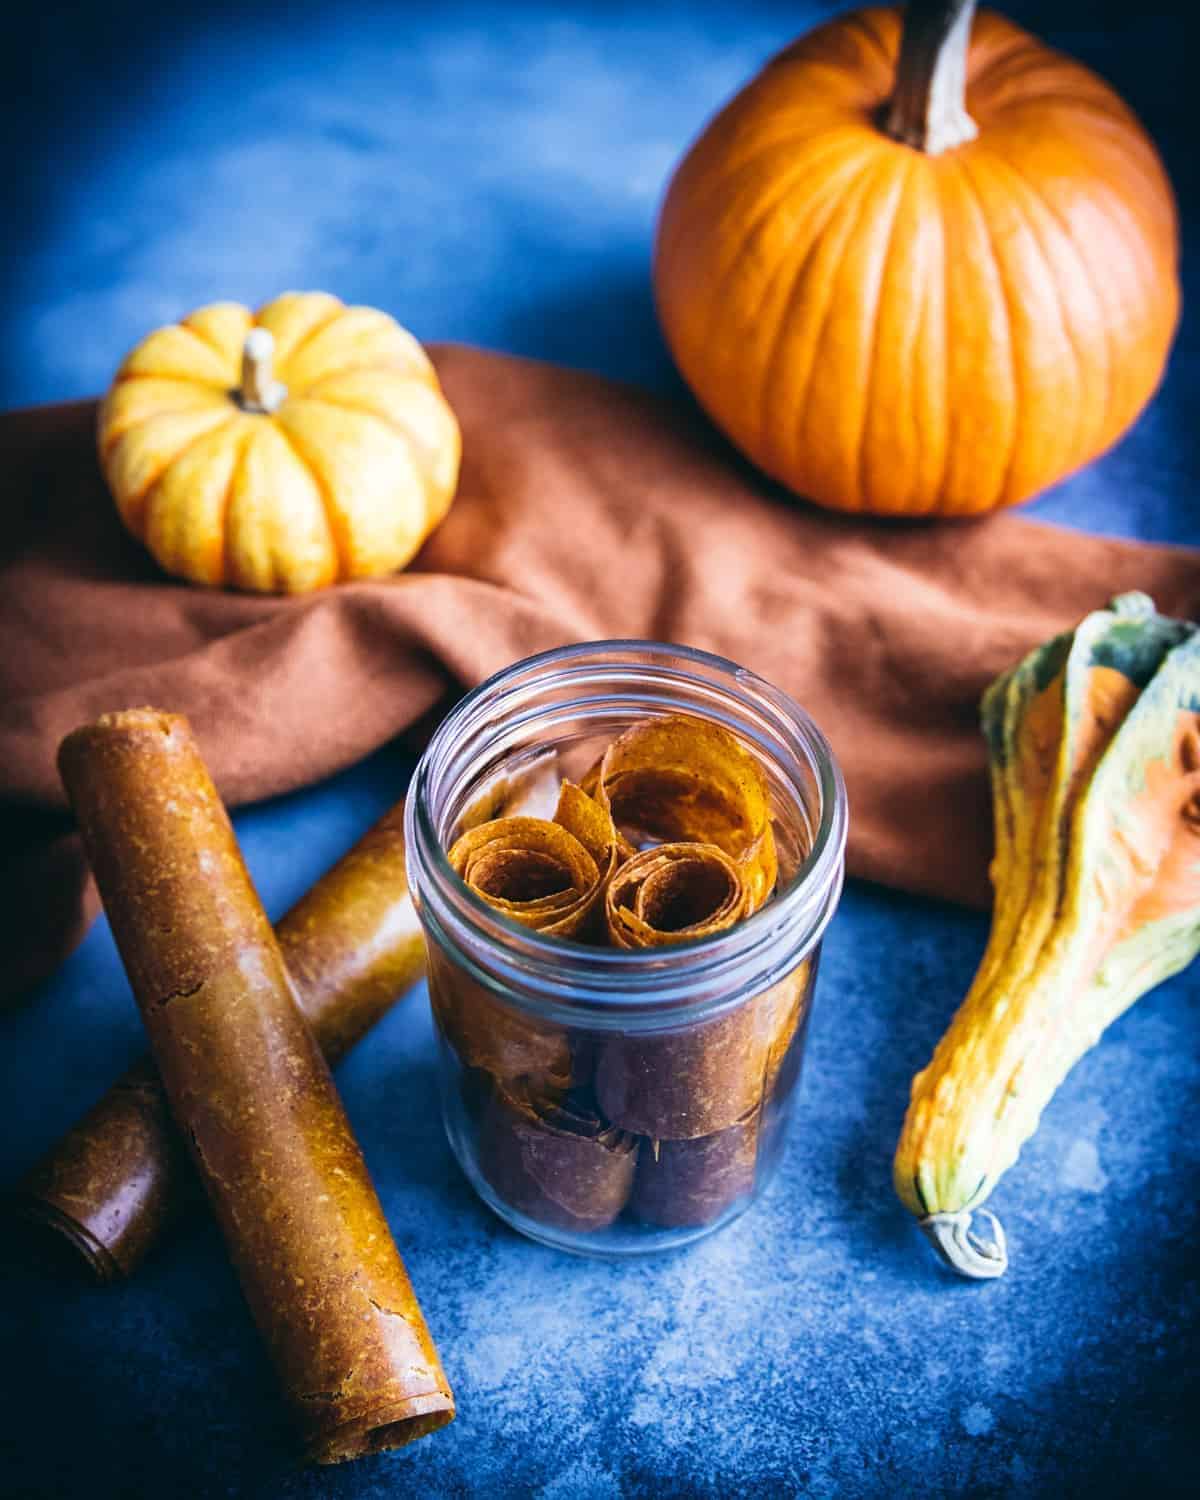 Pumpkin pie leather roll-ups in a glass jar.